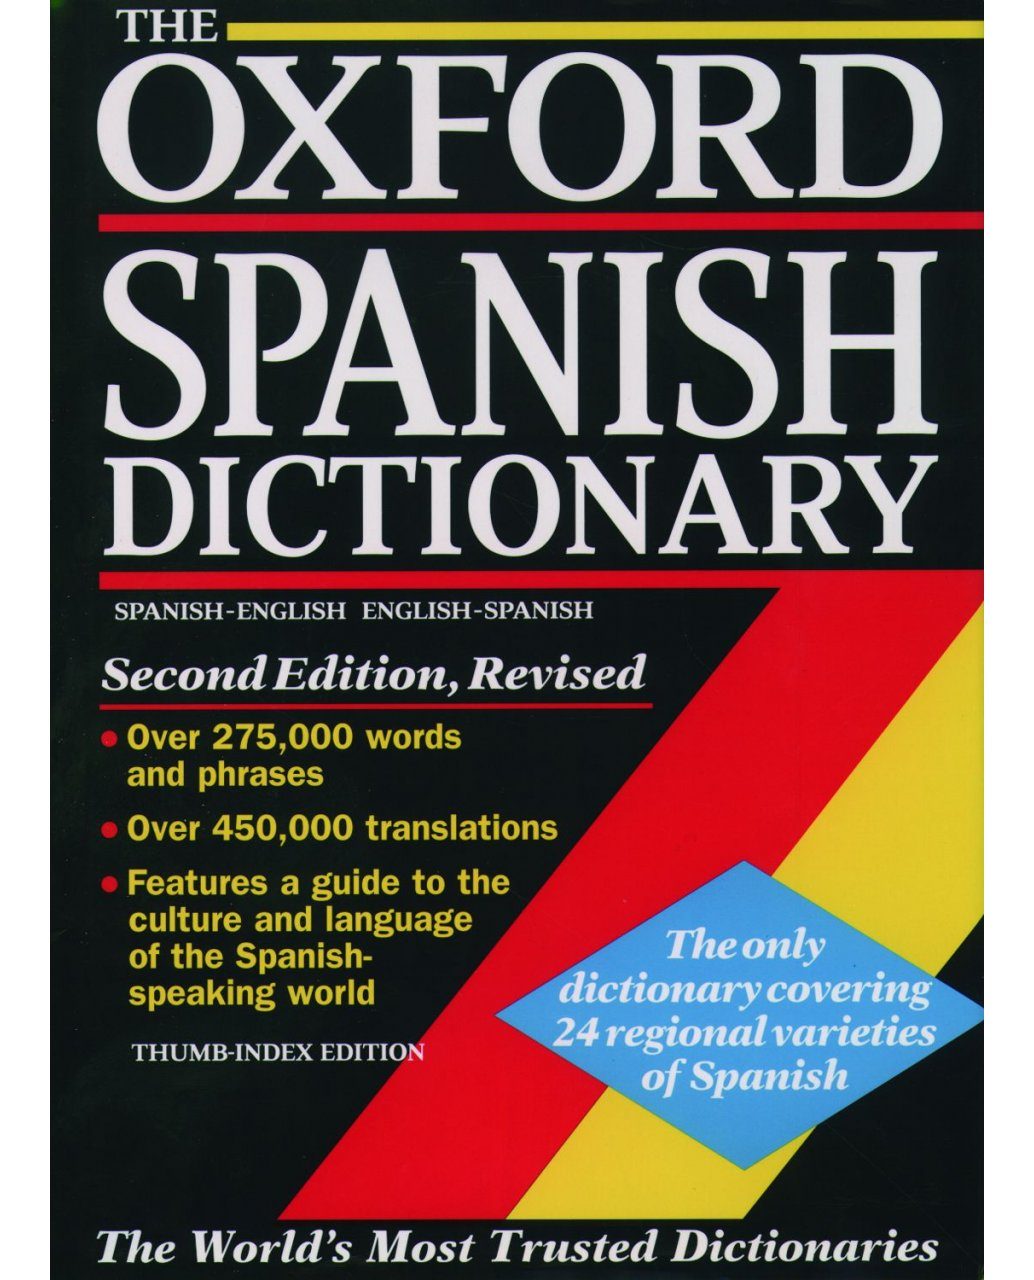 Spanish Dictionary. Oxford Spanish Mini Dictionary. Oxford Spanish-English Dictionary. Испанский Оксфорд. Two dictionary